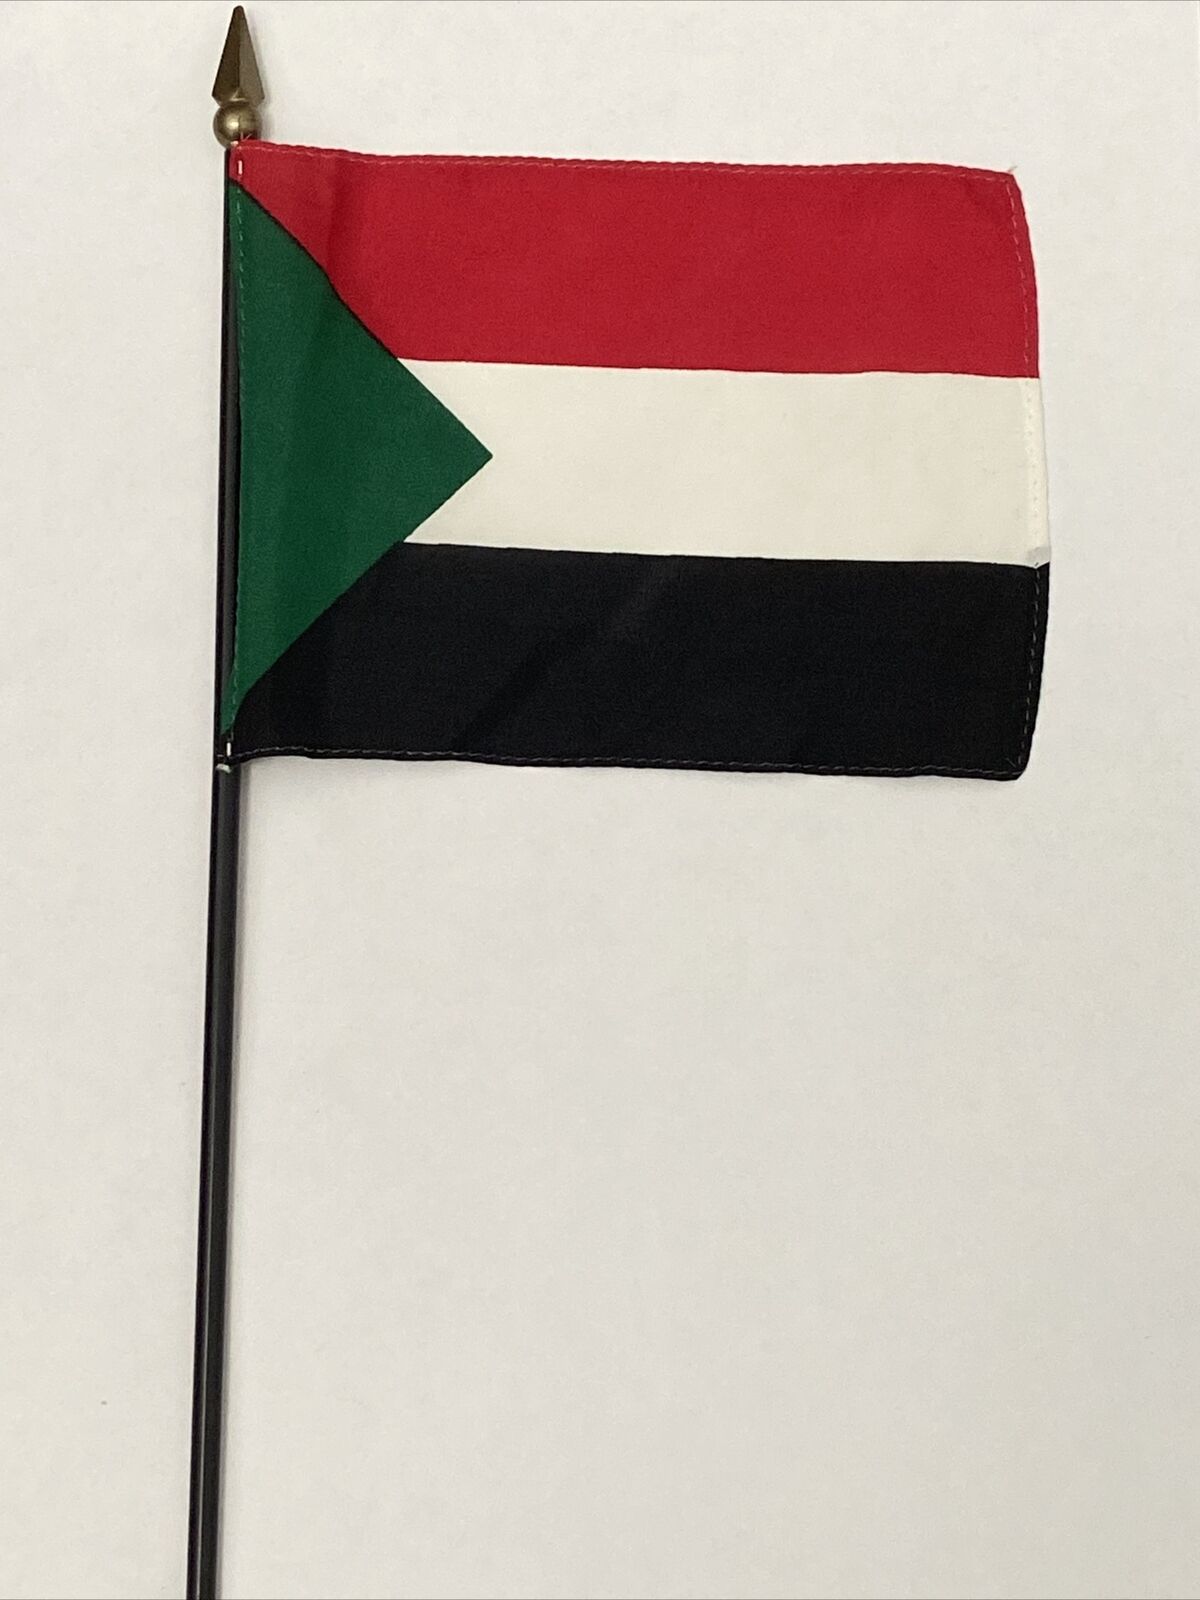 New Republic Of Sudan Mini Desk Flag - Black Wood Stick Gold Top 4” X 6”